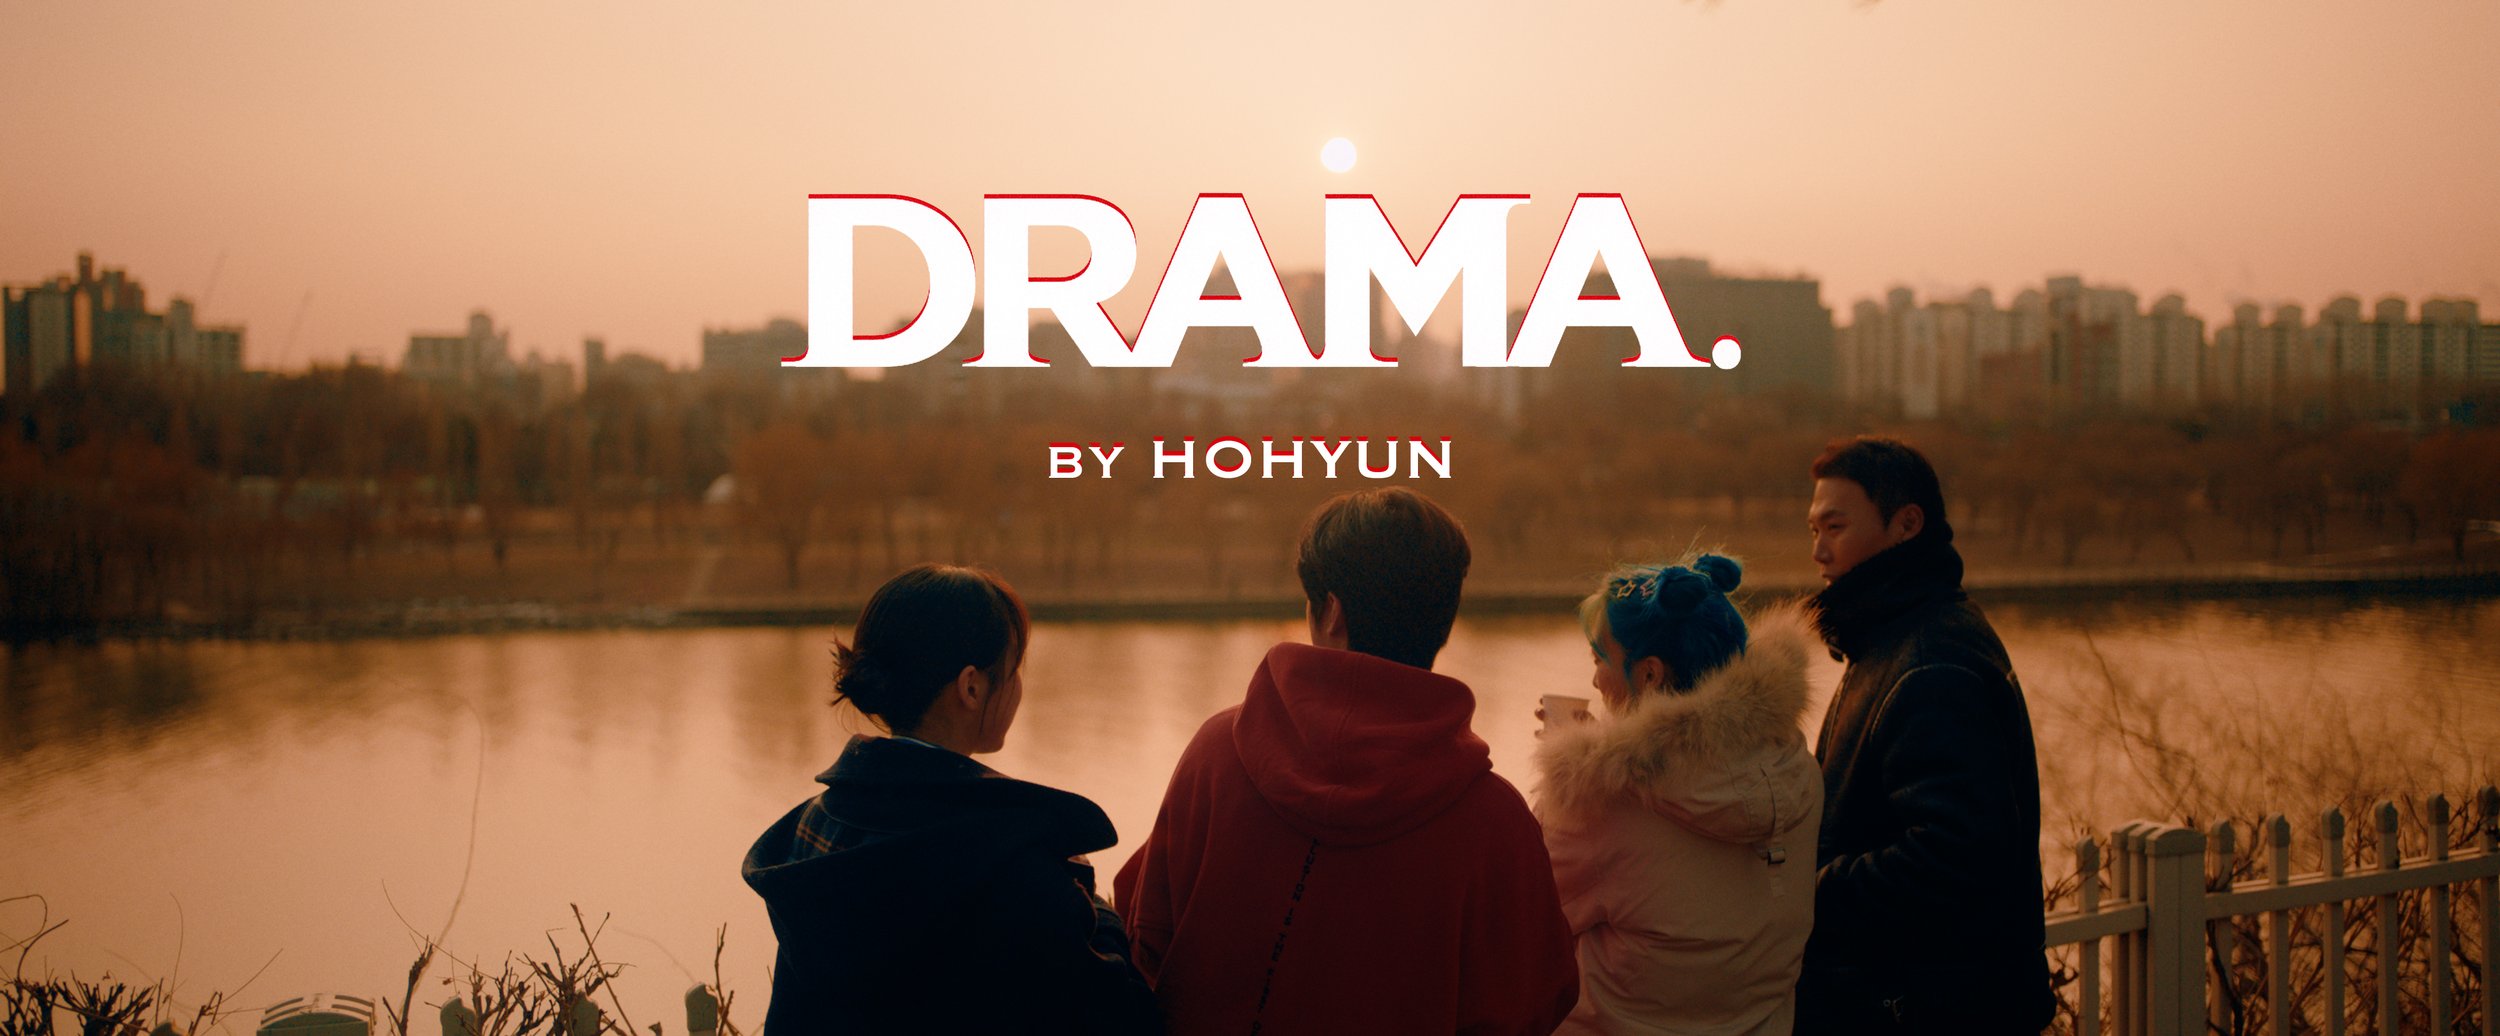 "DRAMA." by Hohyun